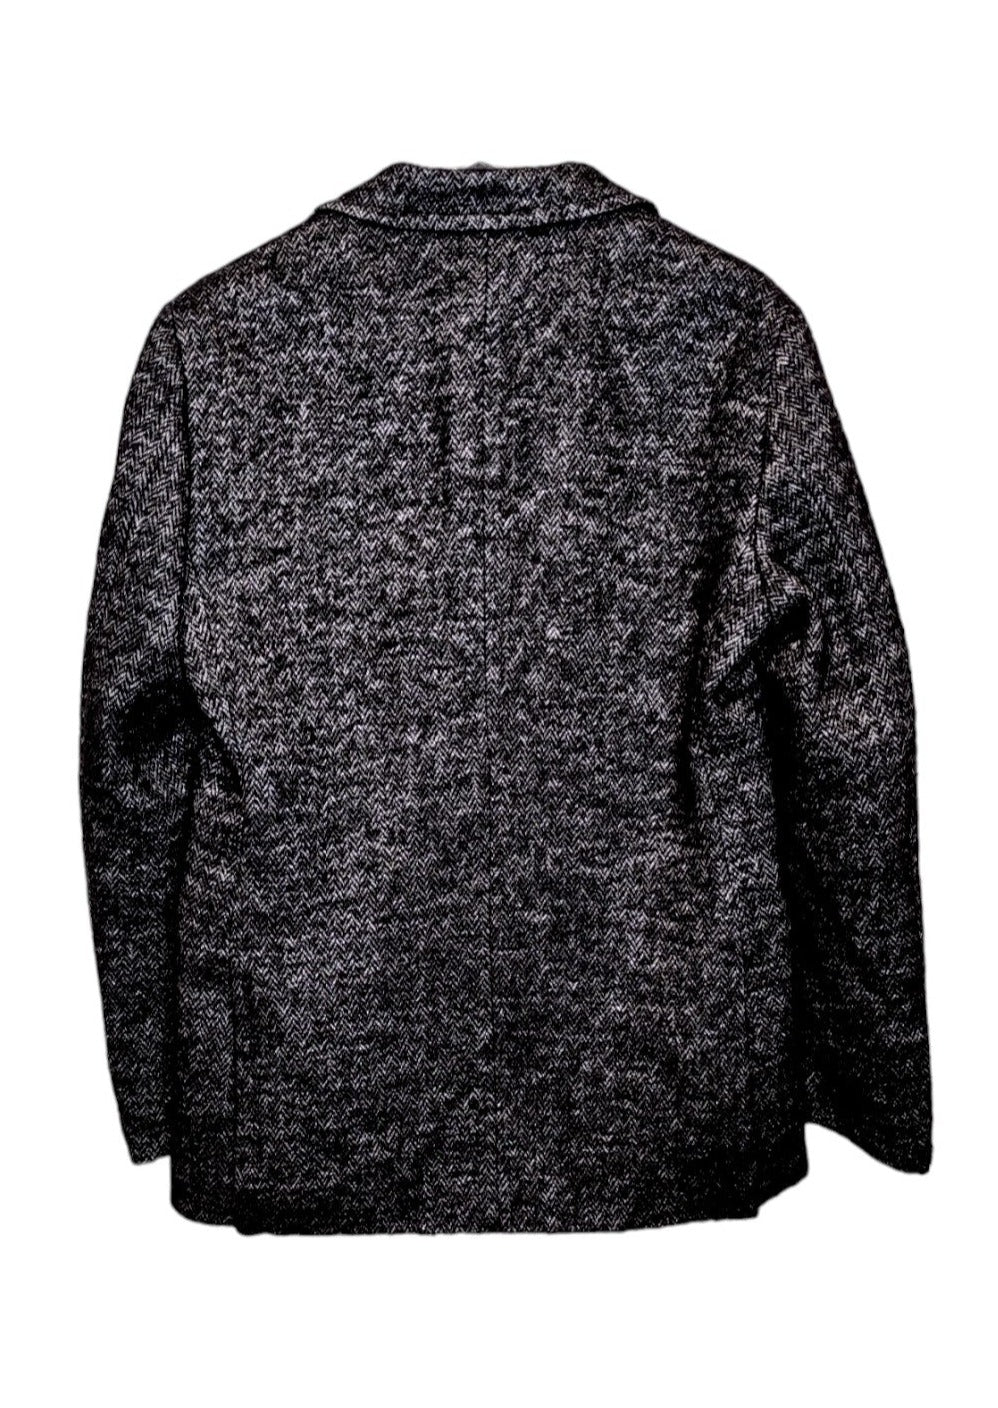 Stock, Lurex Ανδρικό Σακάκι MICHAEL KORS σε Μαύρο - Ασημί Χρώμα (Νο 40R-S/M)